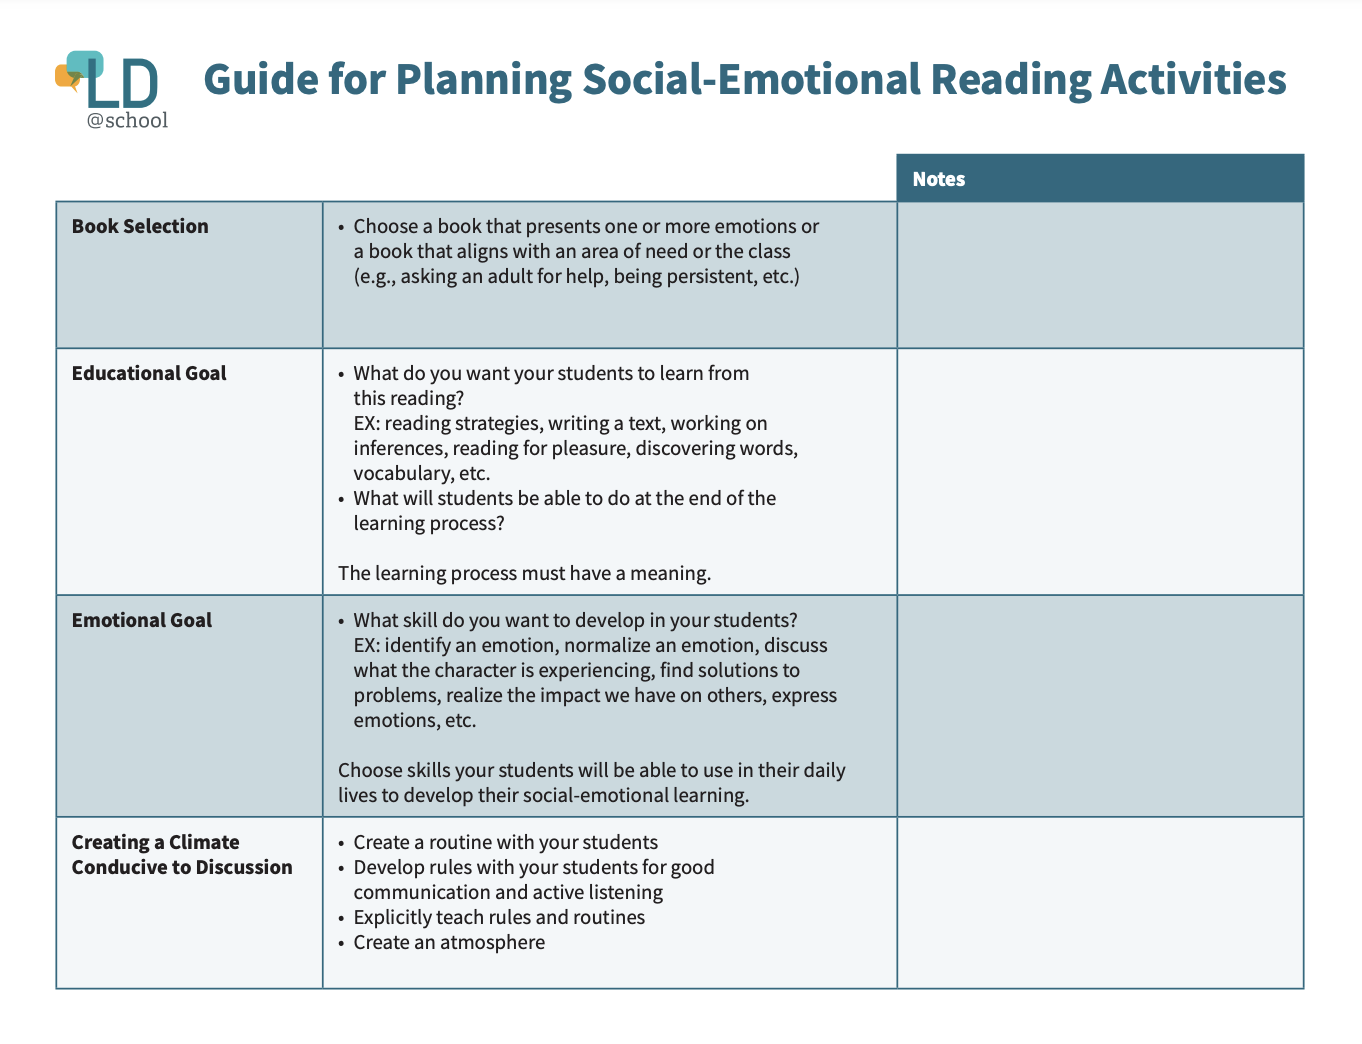 social-emotional learning